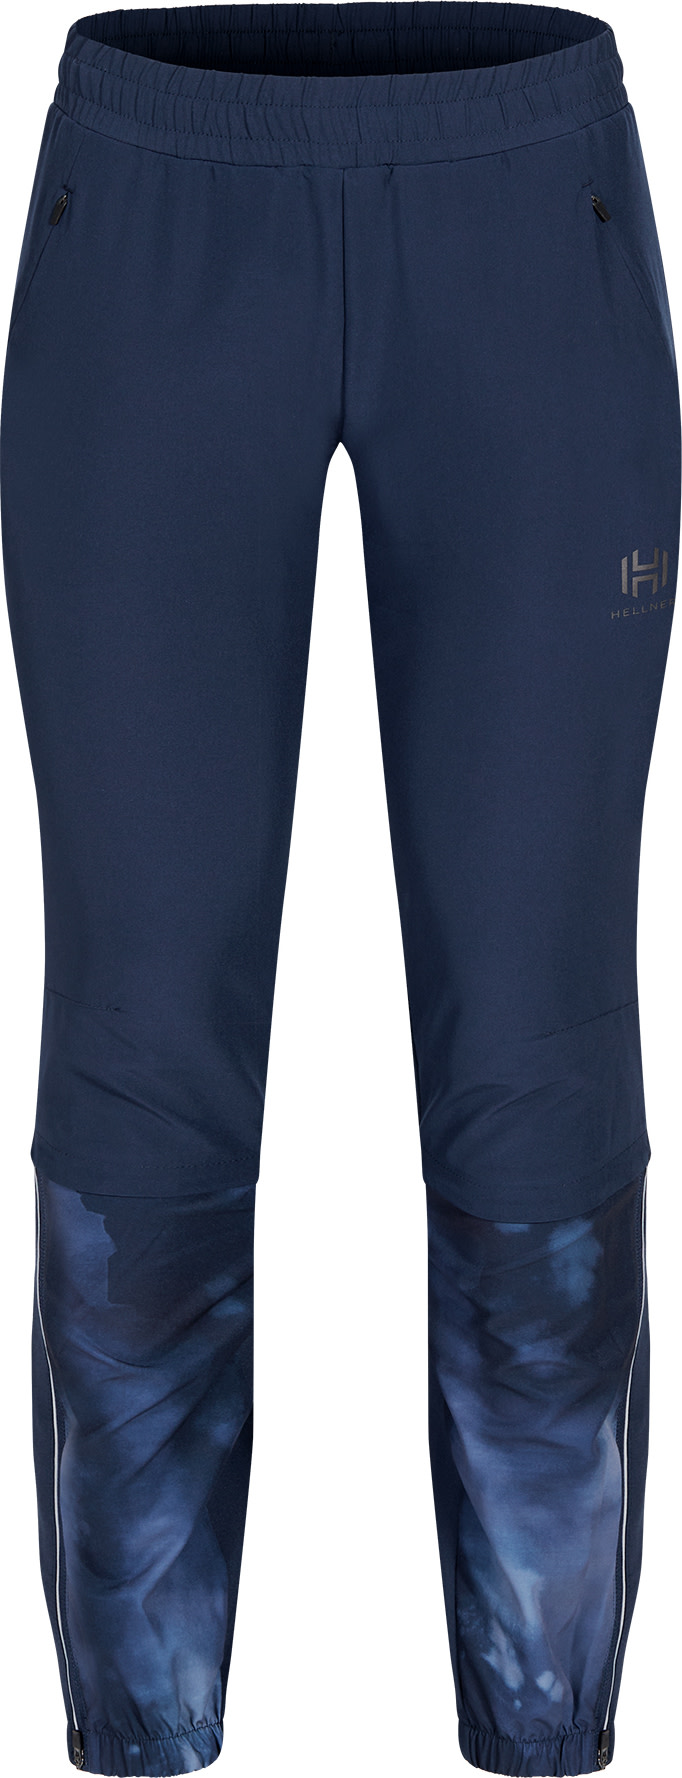 Hellner Women's Harrå Hybrid Pants 2.0 Dress Blue L, Dress Blue